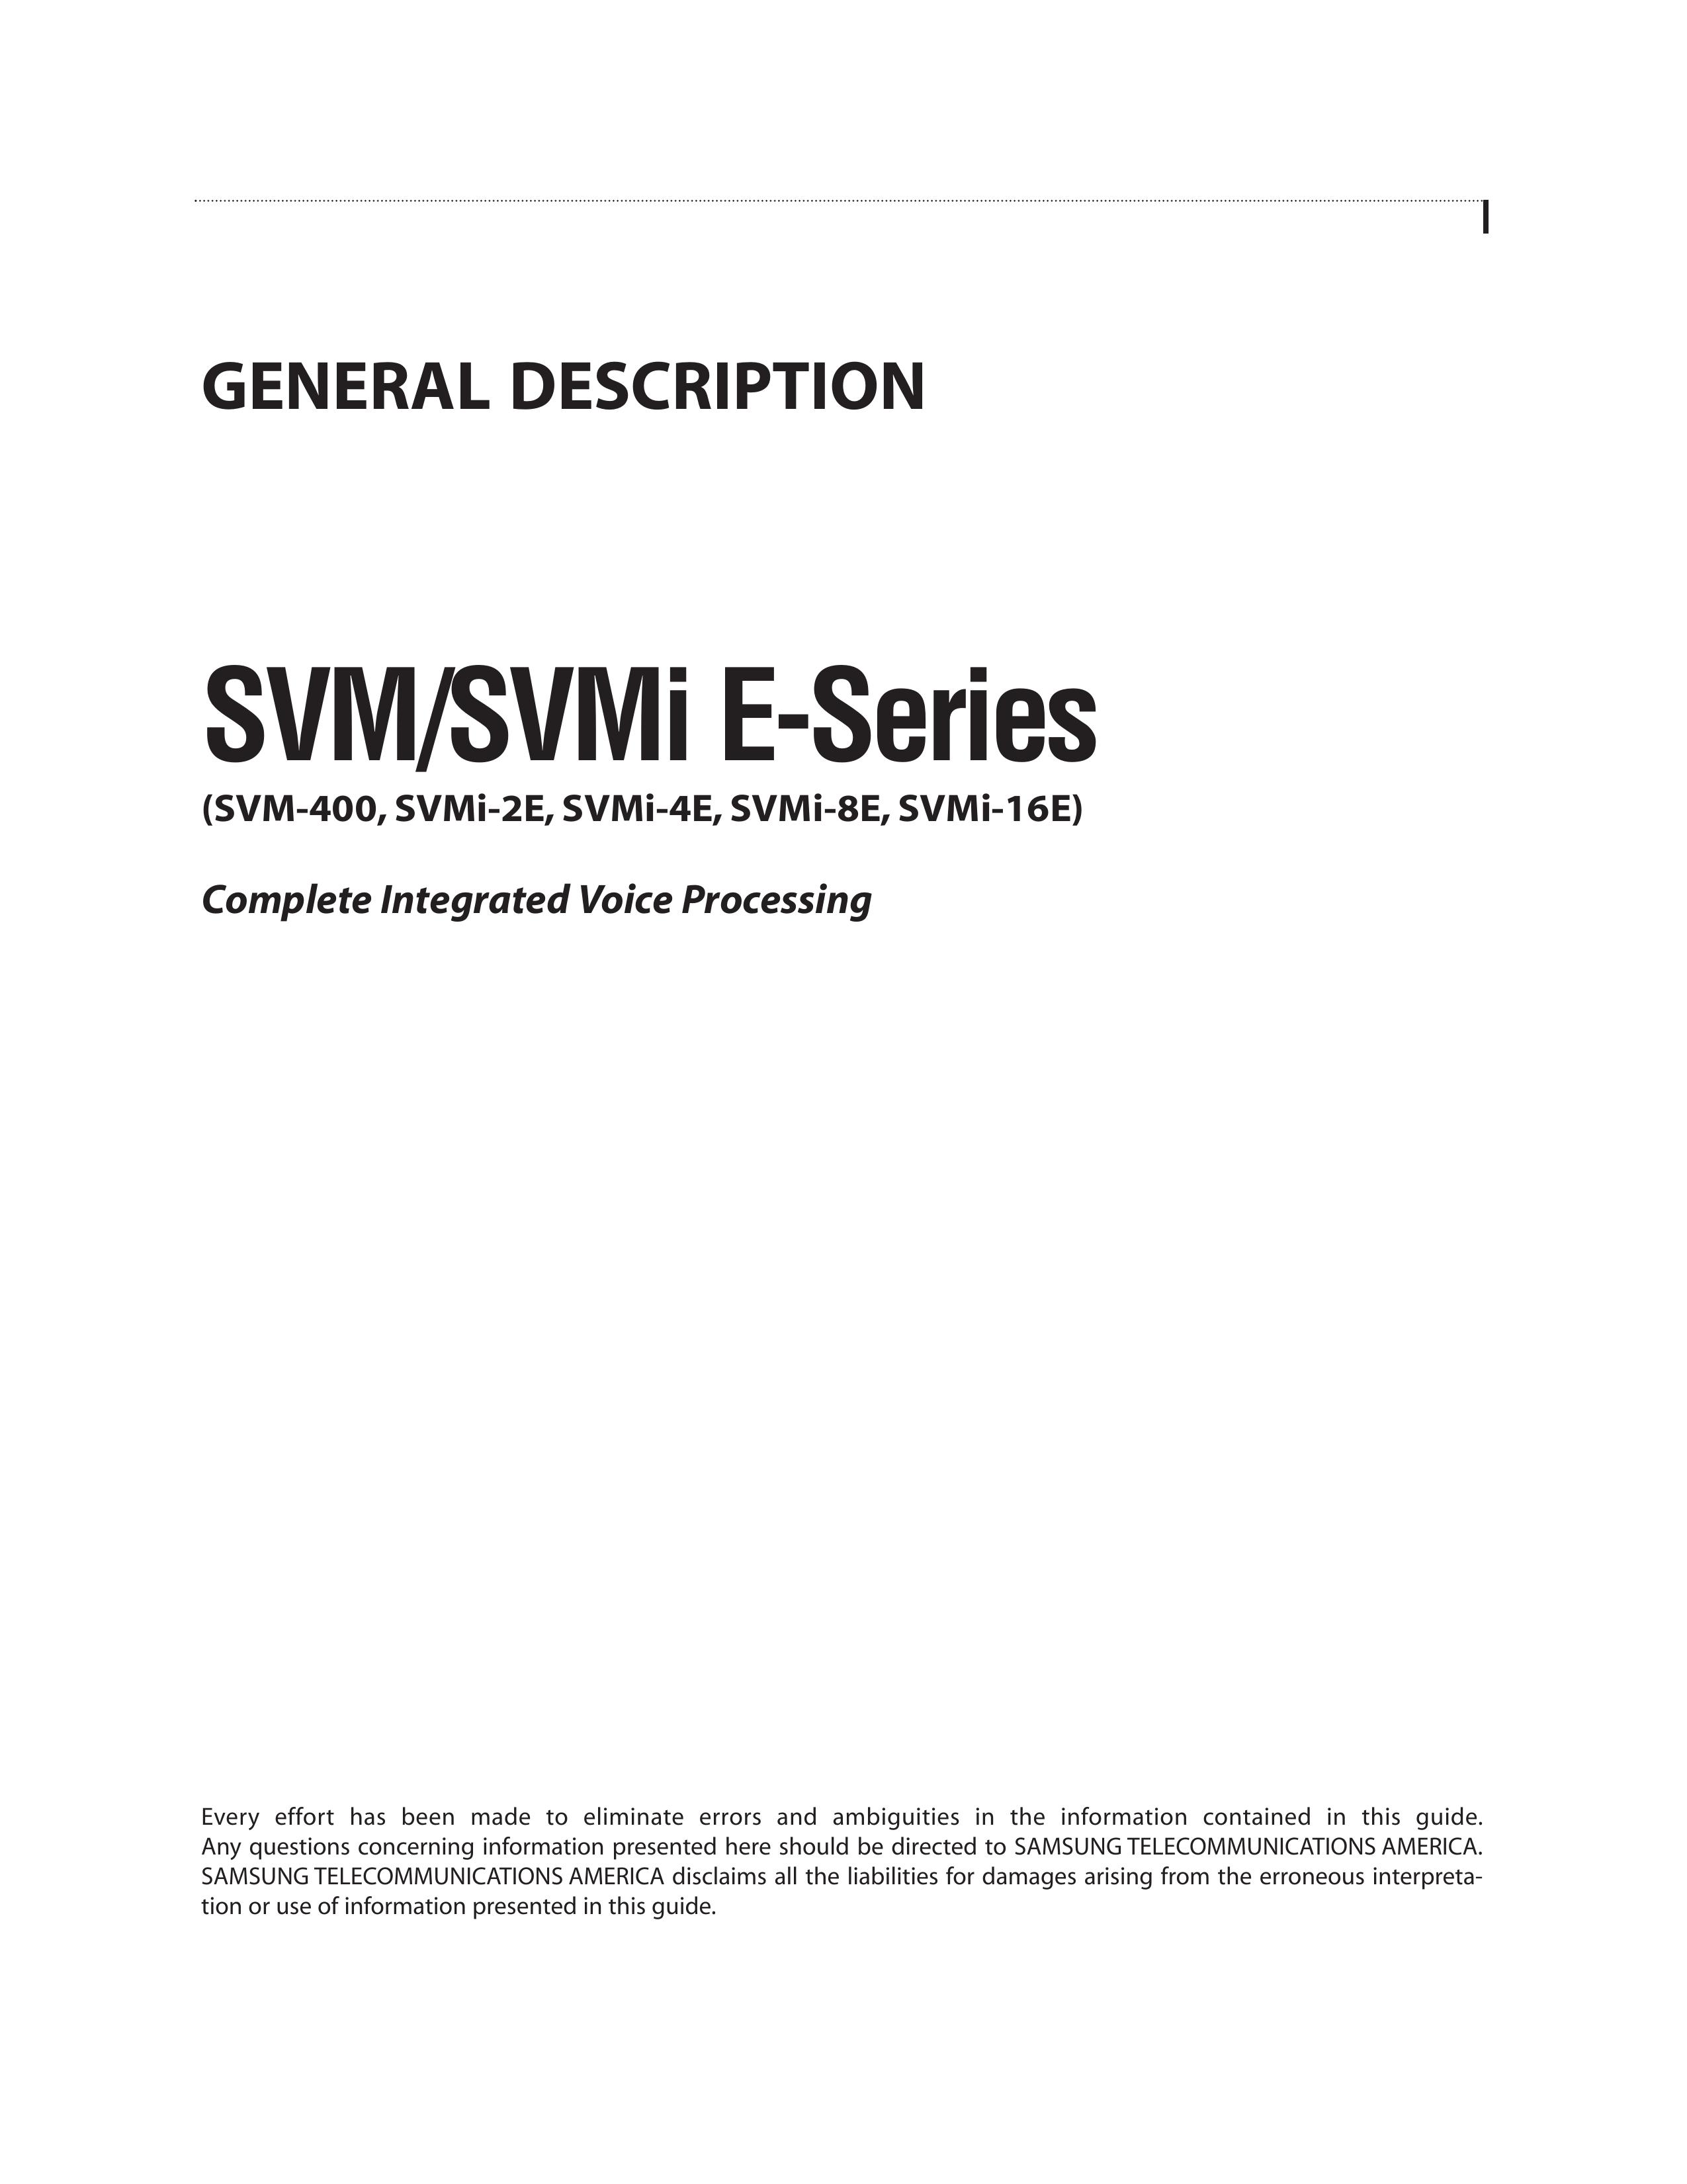 Samsung SVM-400 Recording Equipment User Manual